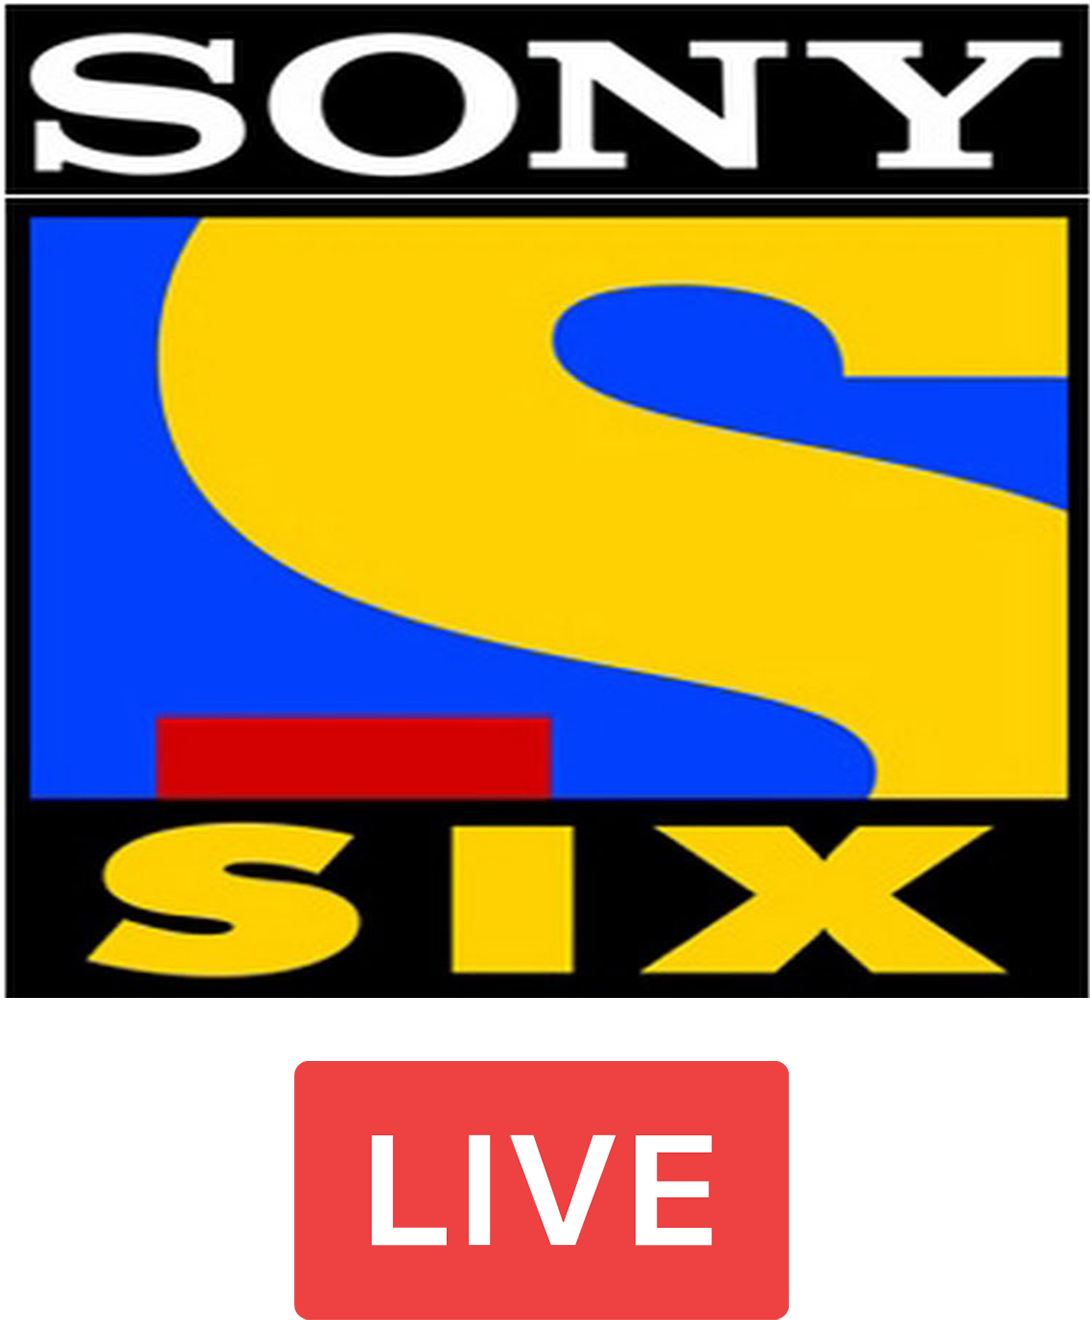 sonic 2 full movie streaming